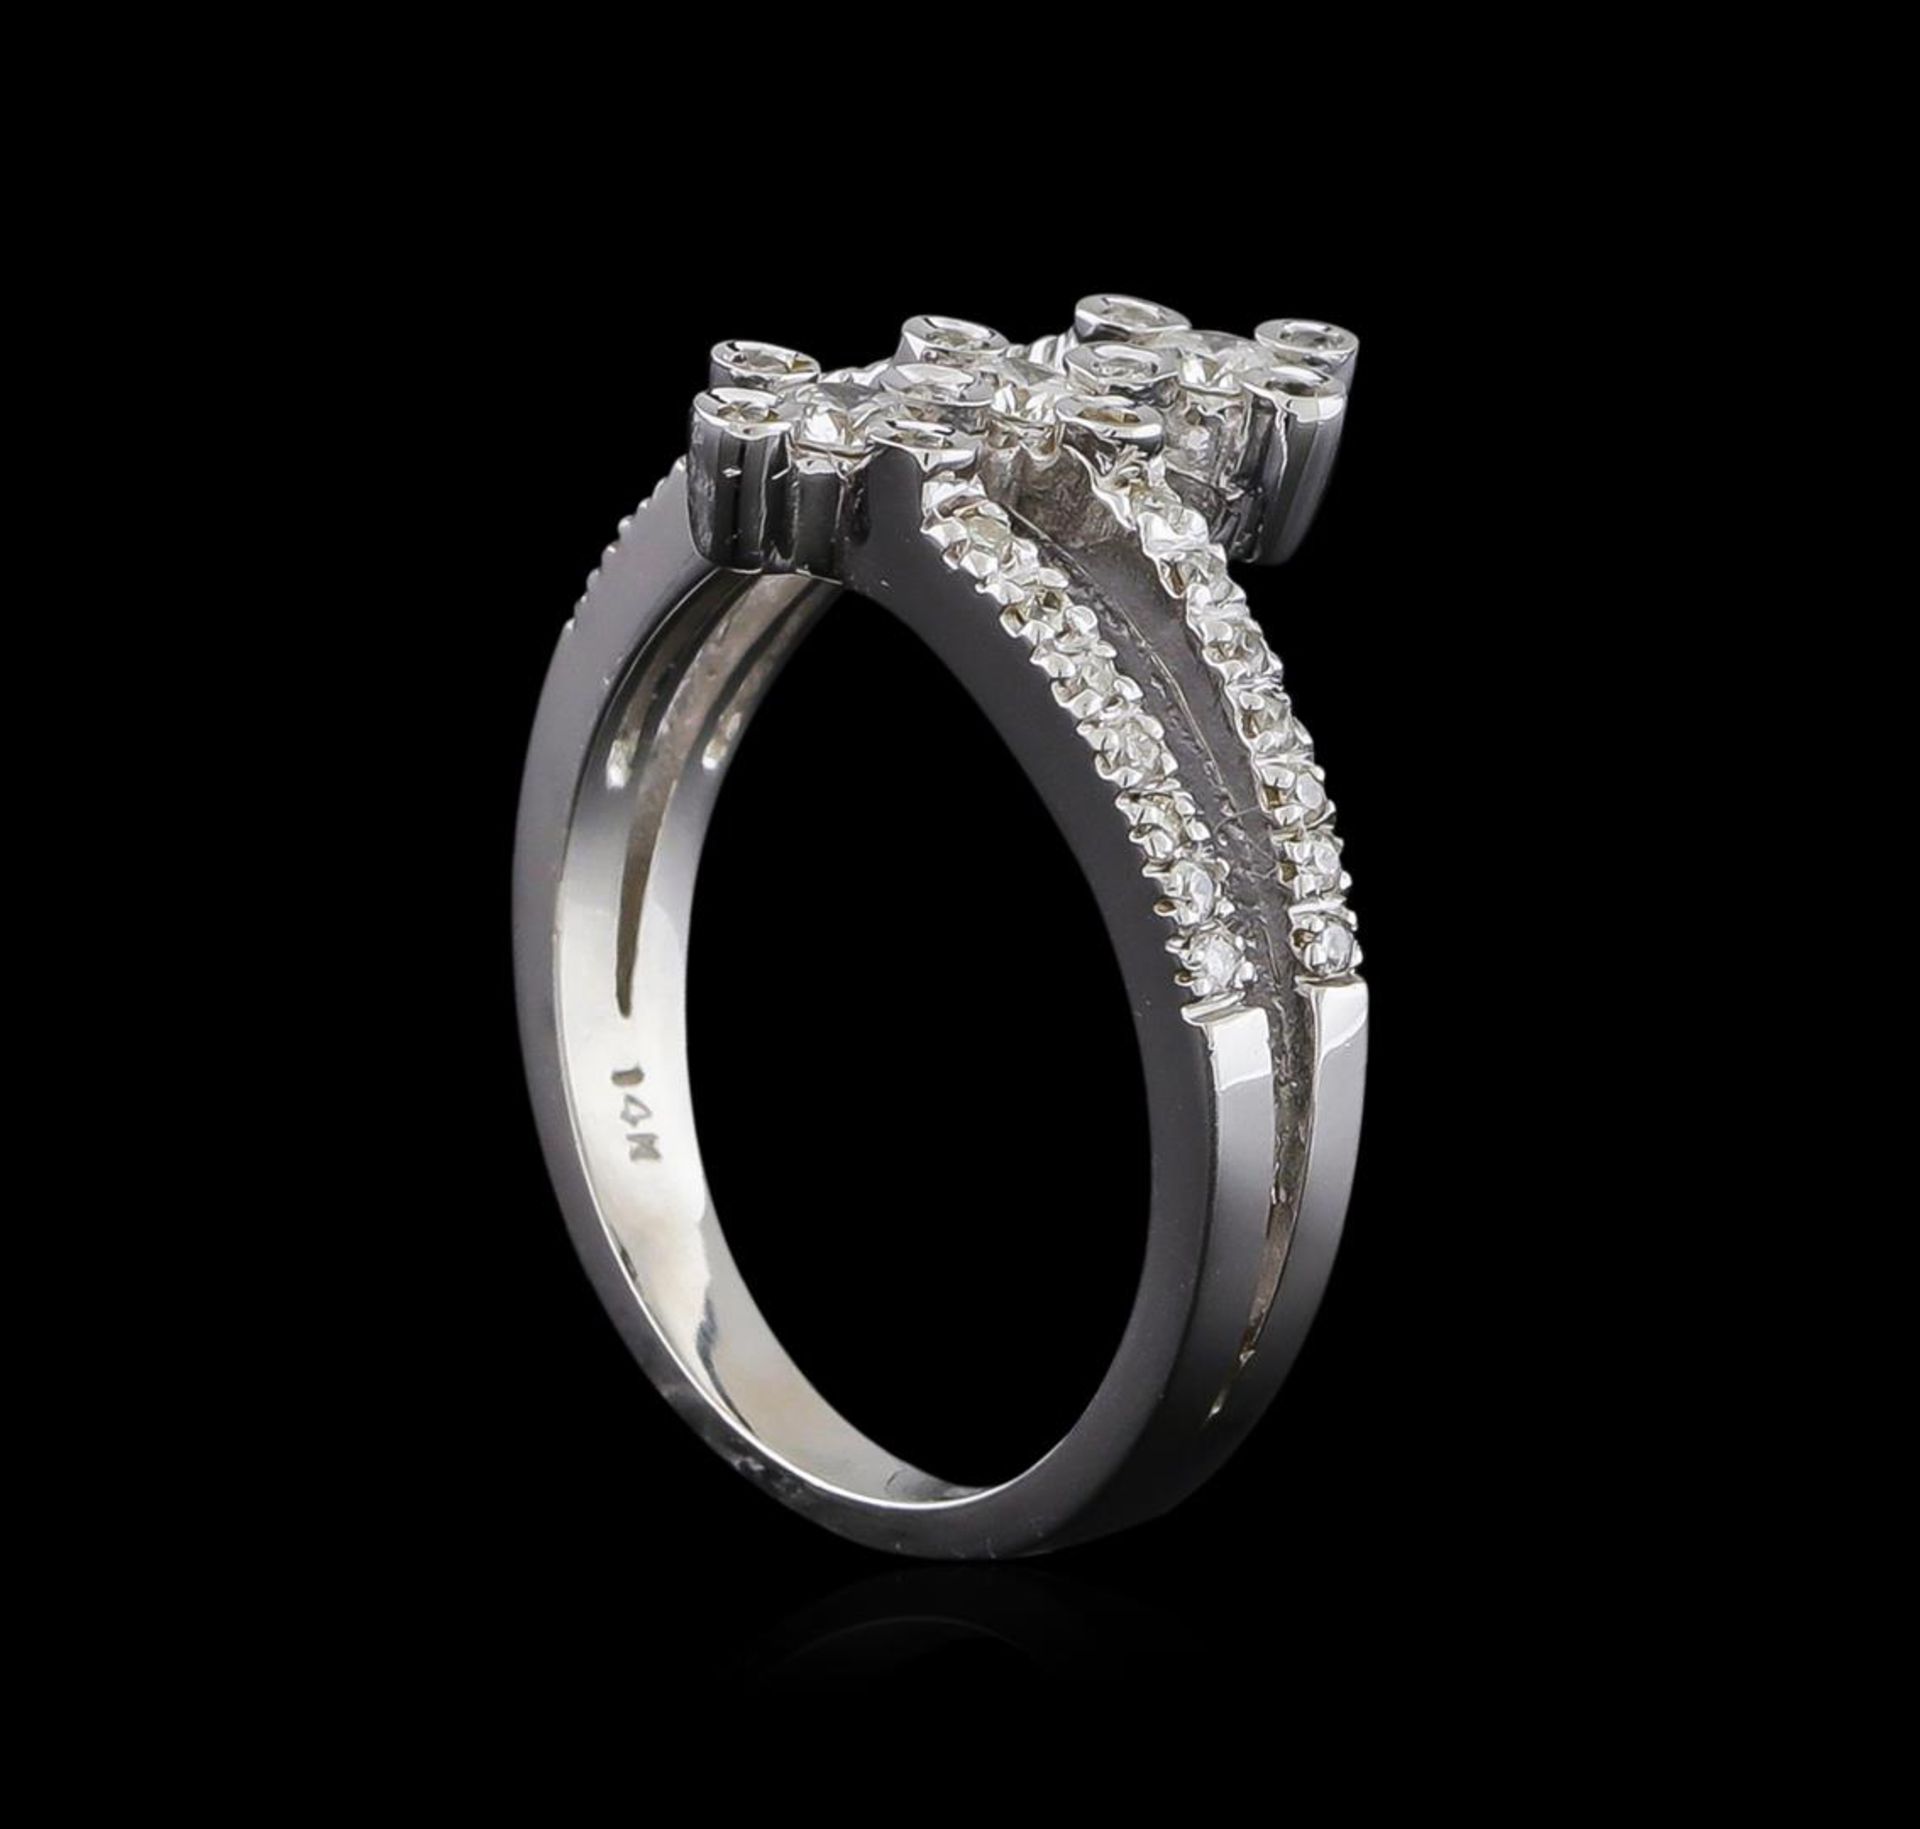 0.37 ctw Diamond Ring - 14KT White Gold - Image 4 of 4